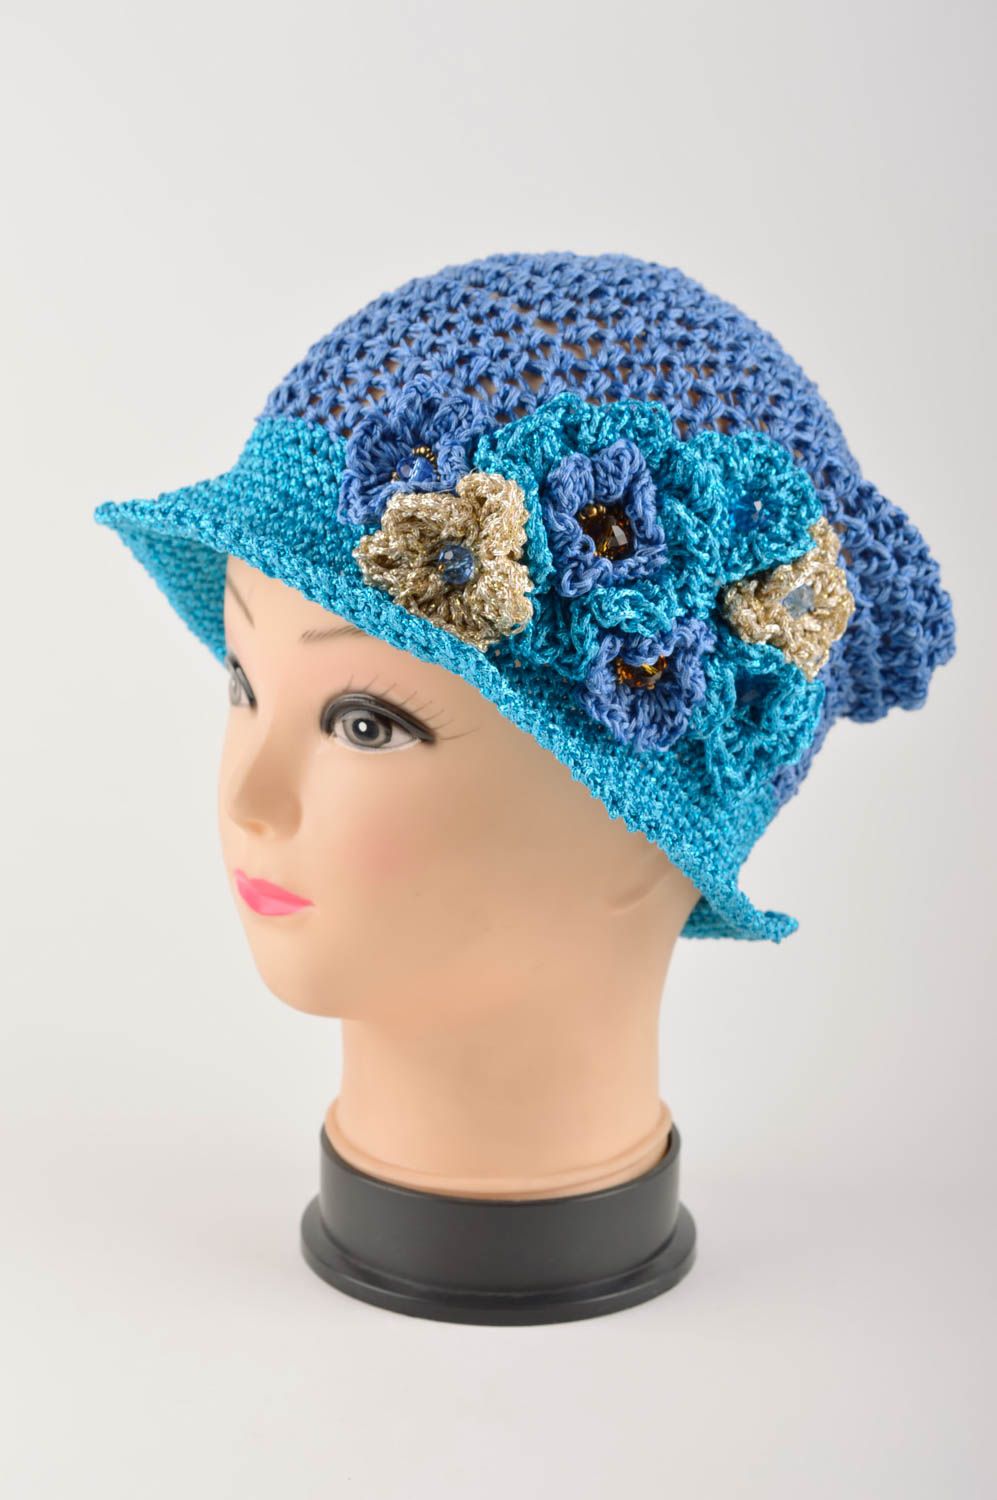 Handmade crochet hat summer hat ladies sun hats designer accessories gift ideas photo 2